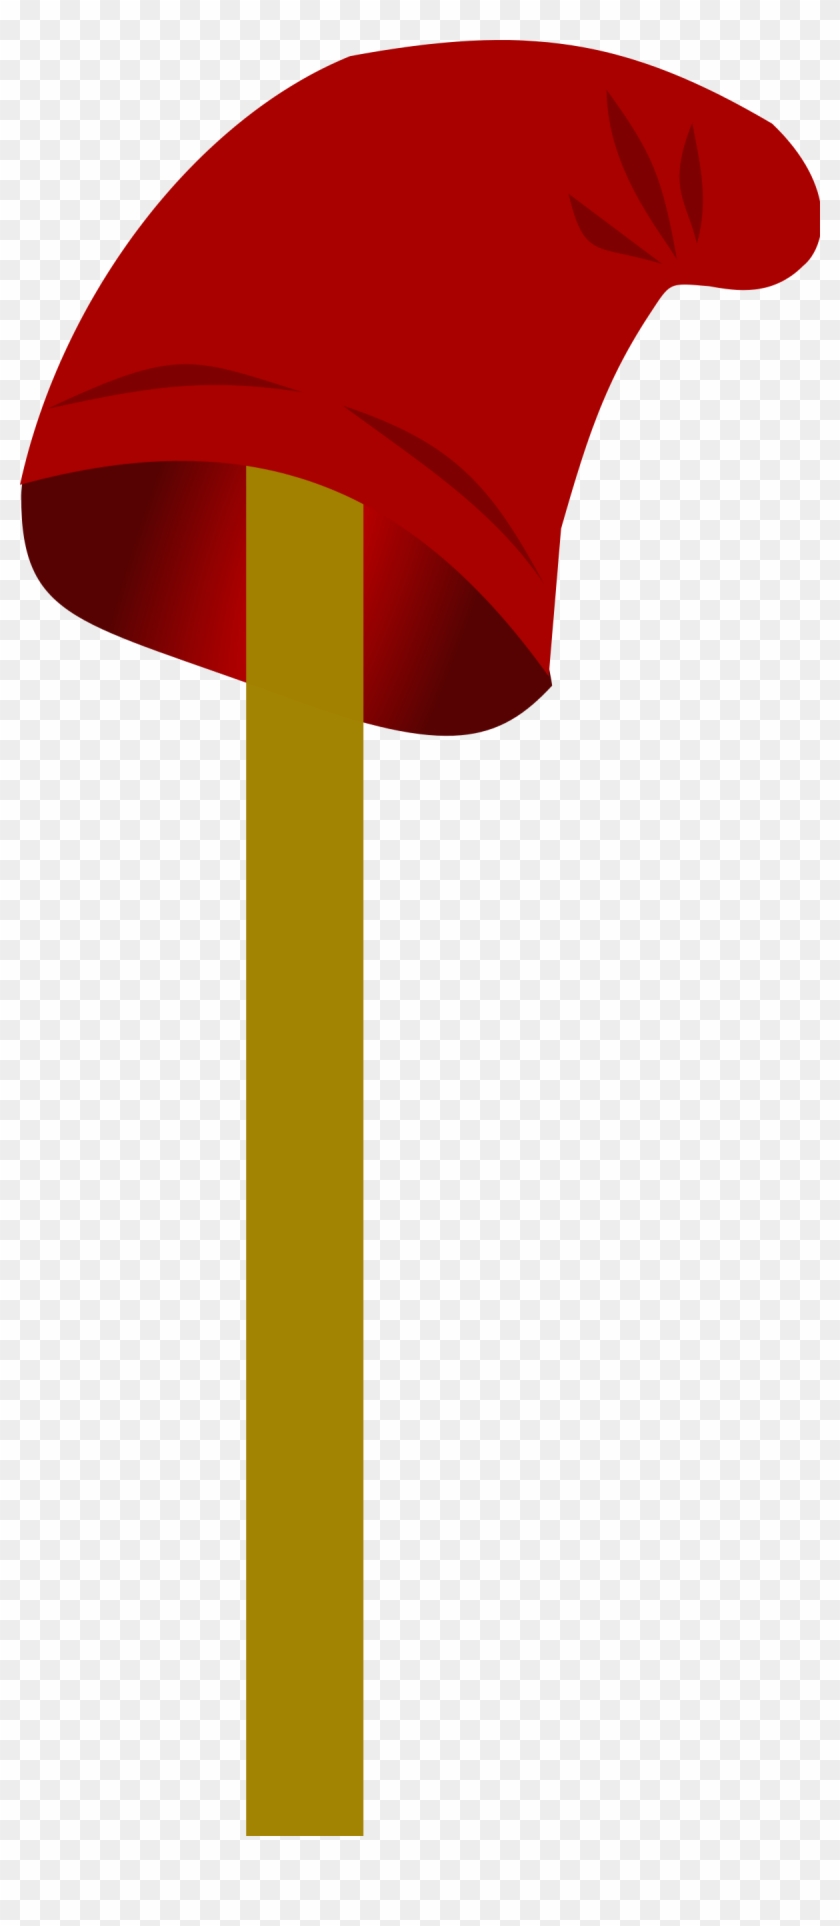 Liberty Pole - Phrygian Cap On Pole Clipart